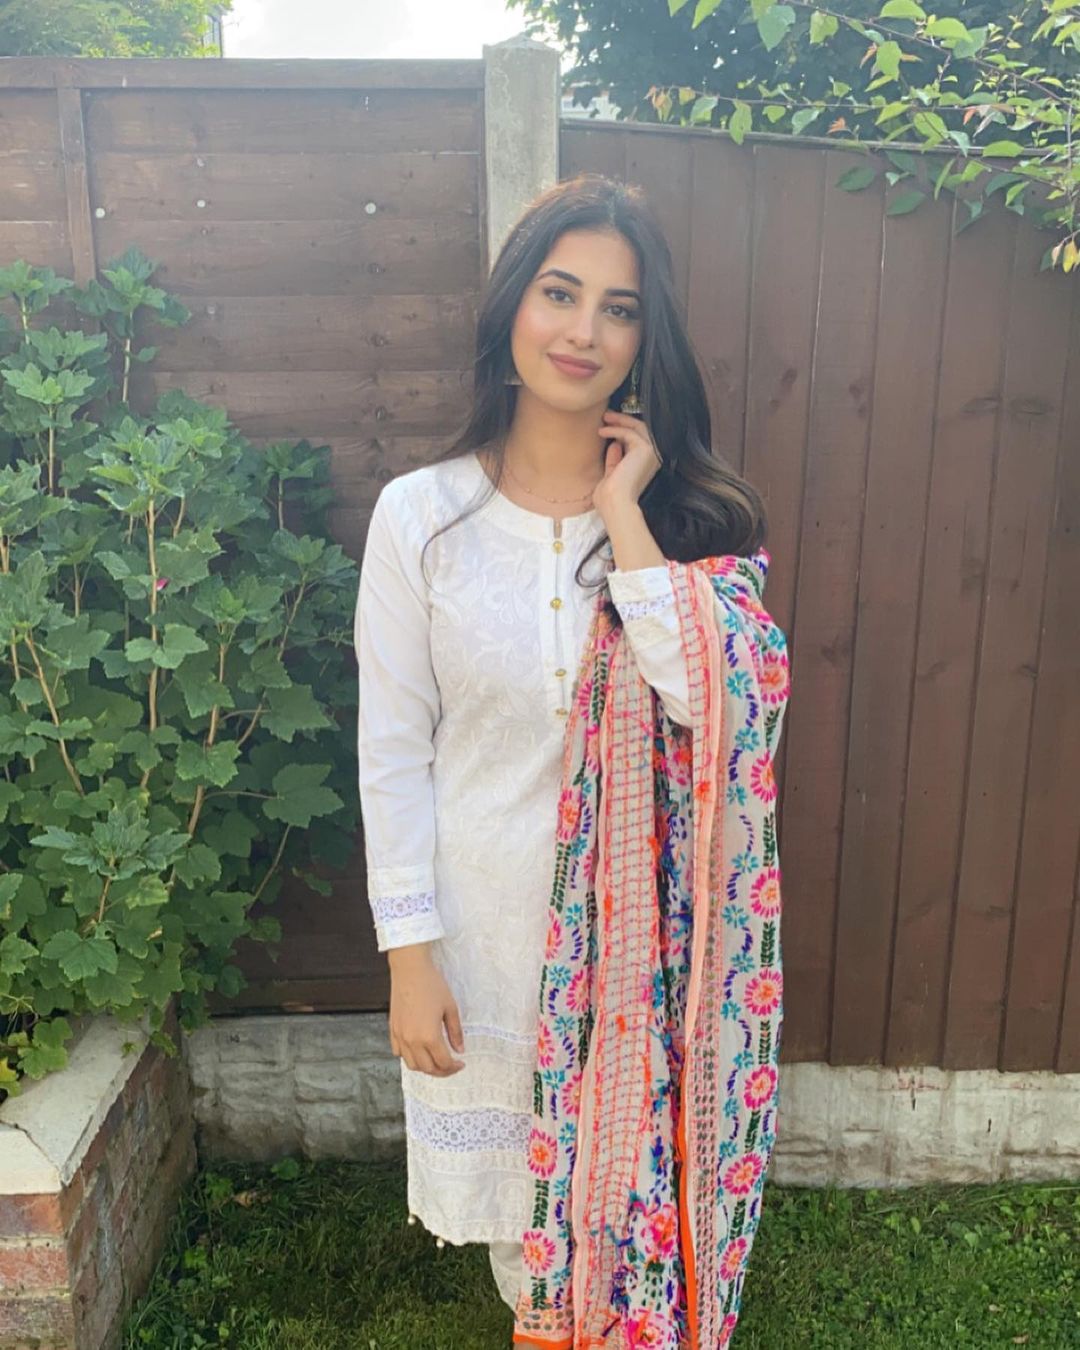 British Pakistani Beauty in Ethnic Dress | Scrolller